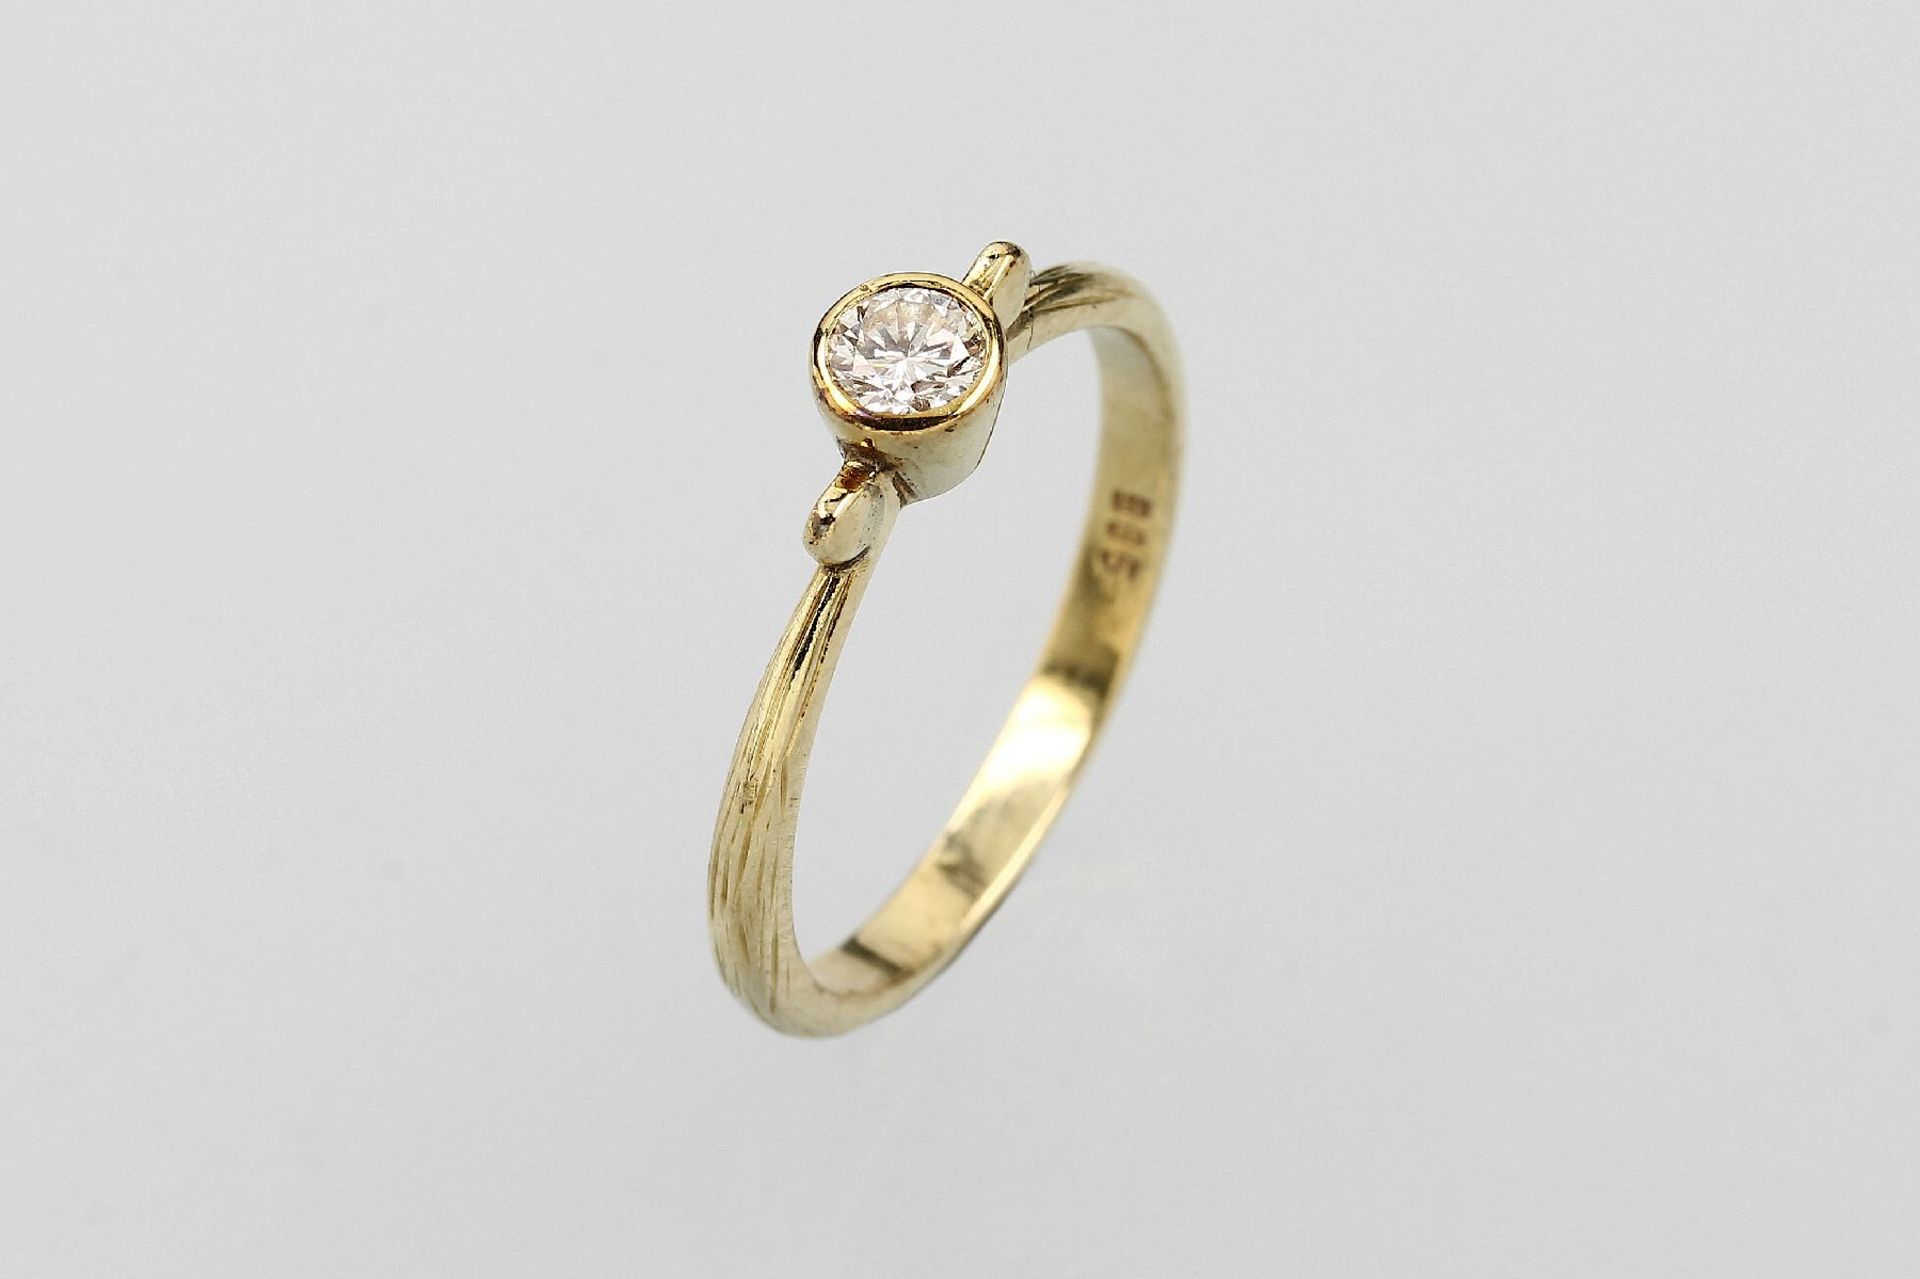 14 kt Gold Ring mit Brillant, GG 585/000, Brillant ca. 0.16 ct Weiß/si, ca. 2.6 g, RW 5514 kt gold